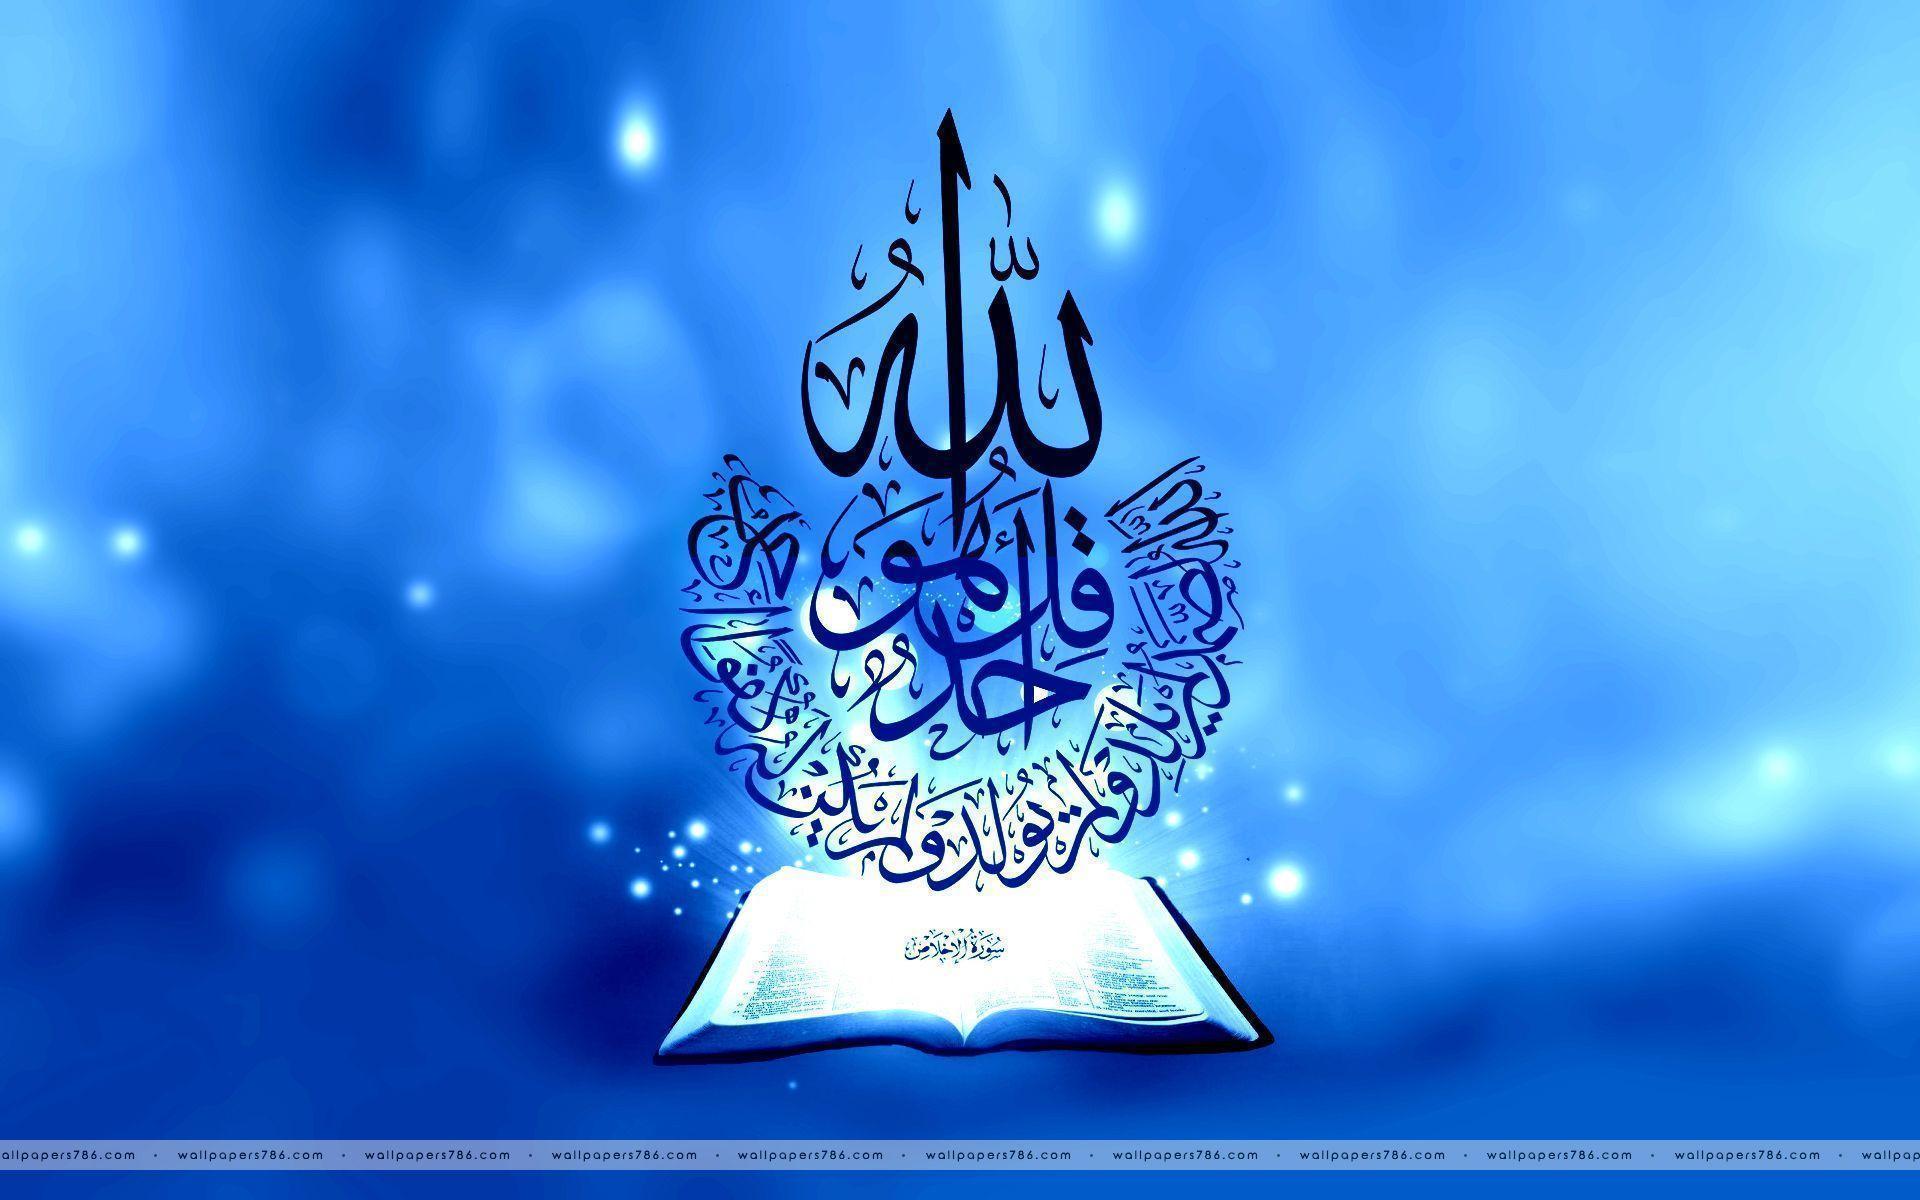 Allah Name Wallpaper HD Free Download